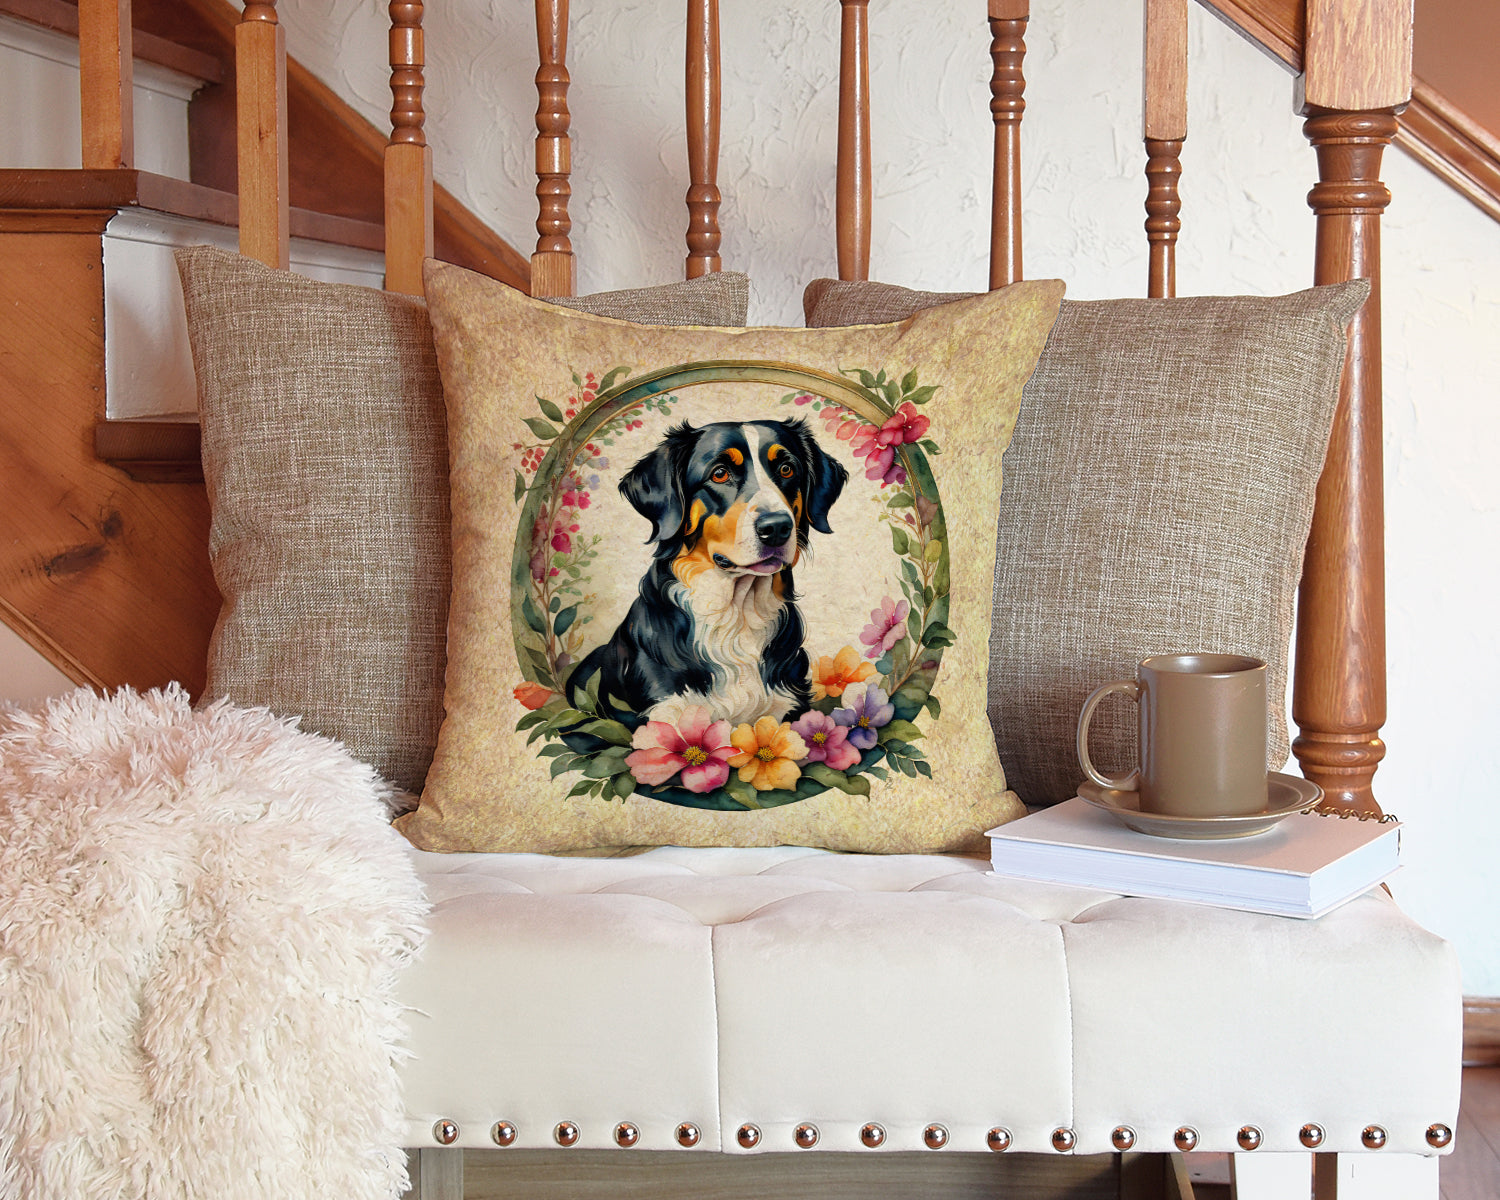 Appenzeller Sennenhund and Flowers Fabric Decorative Pillow